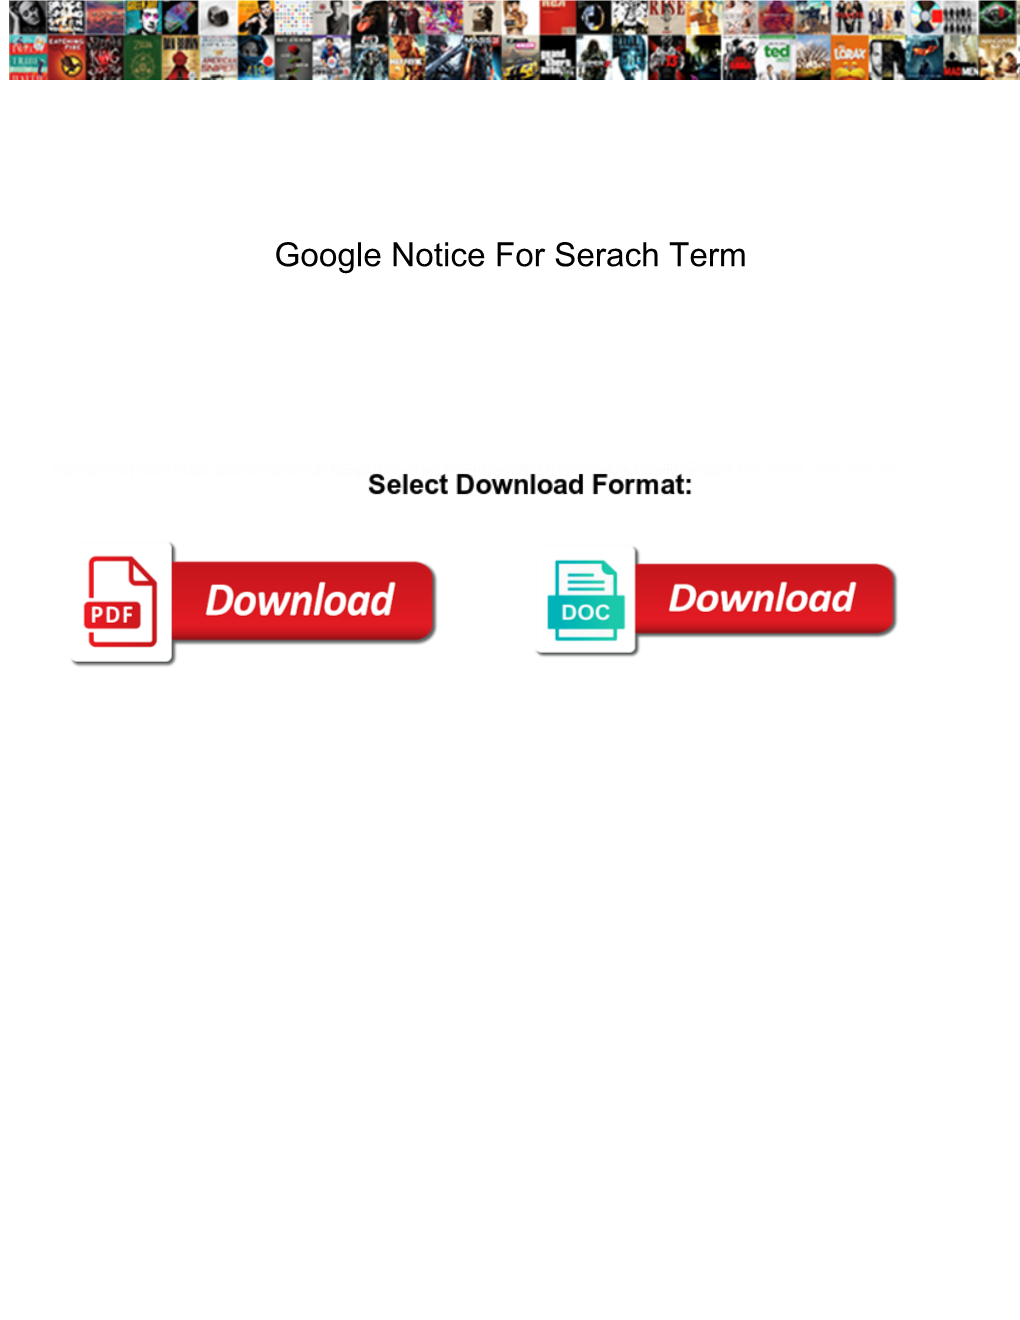 Google Notice for Serach Term